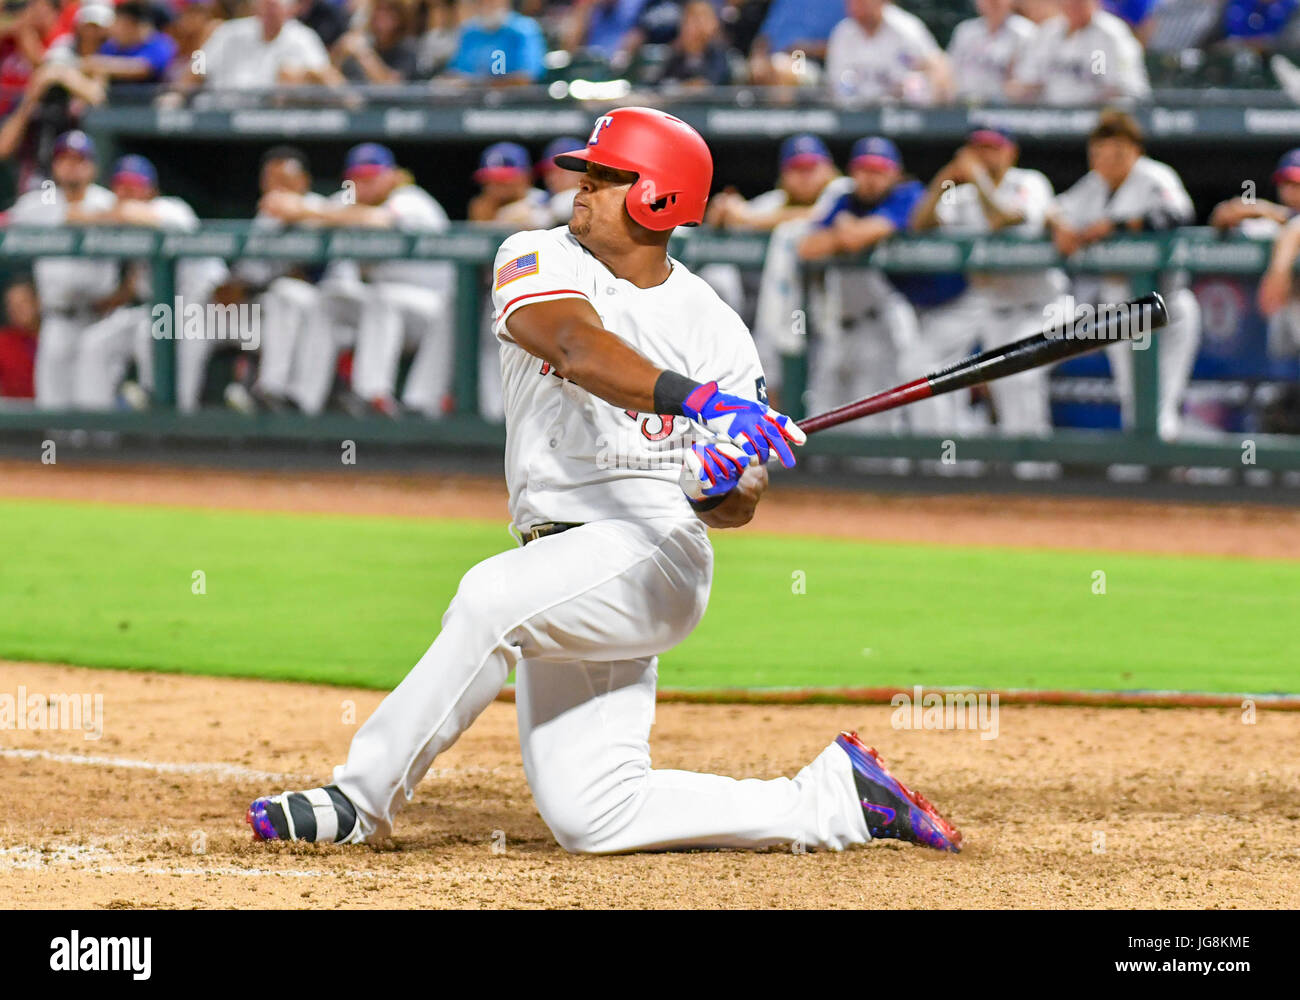 Jul 03, 2017: Texas Rangers third baseman Adrian Beltre #29 drops